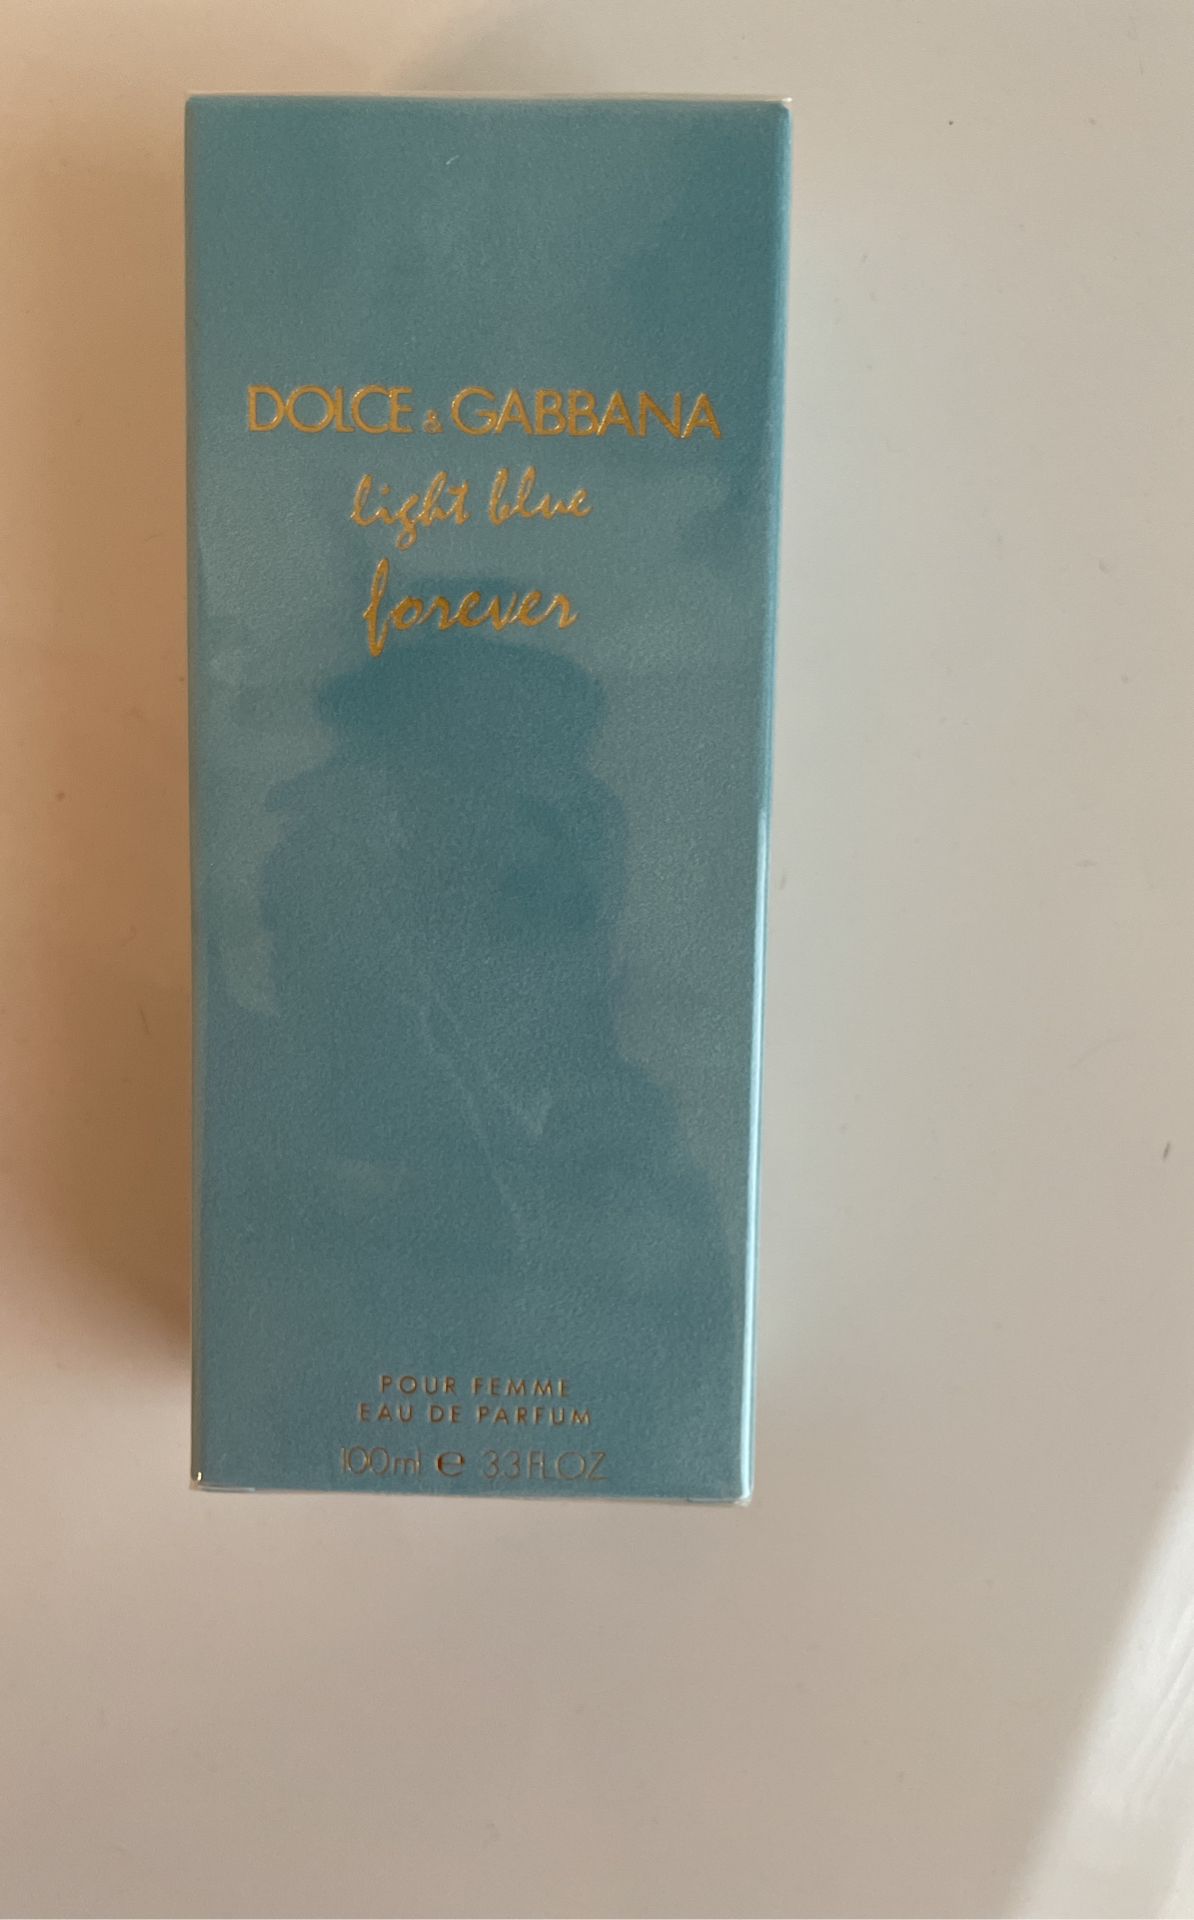 Dolce & Gabbana Light Blue Perfume, 100ml